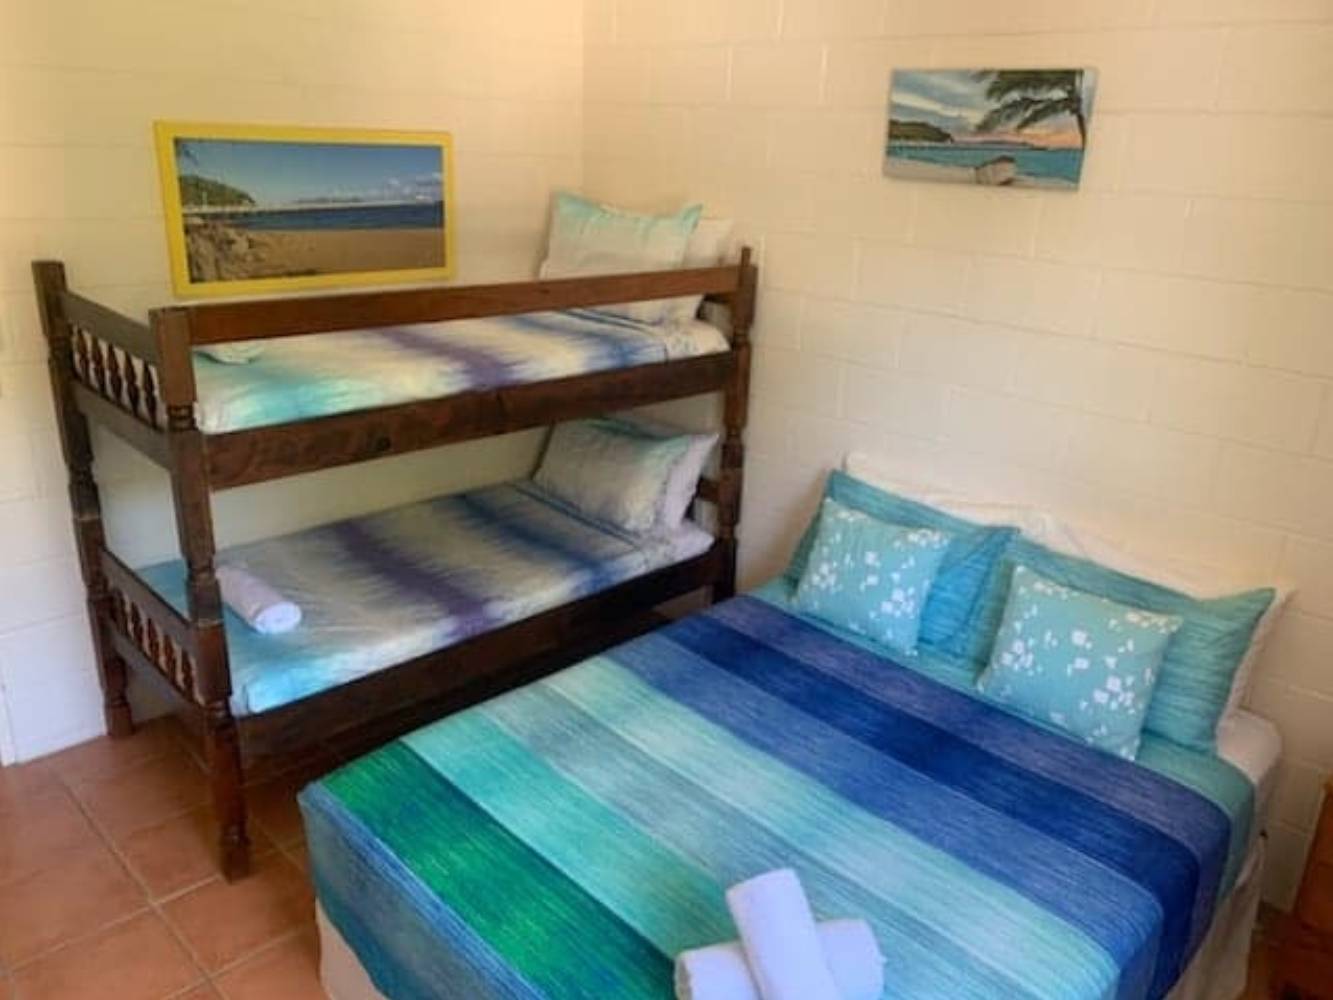 Second bedroom - bunks and Queen bed